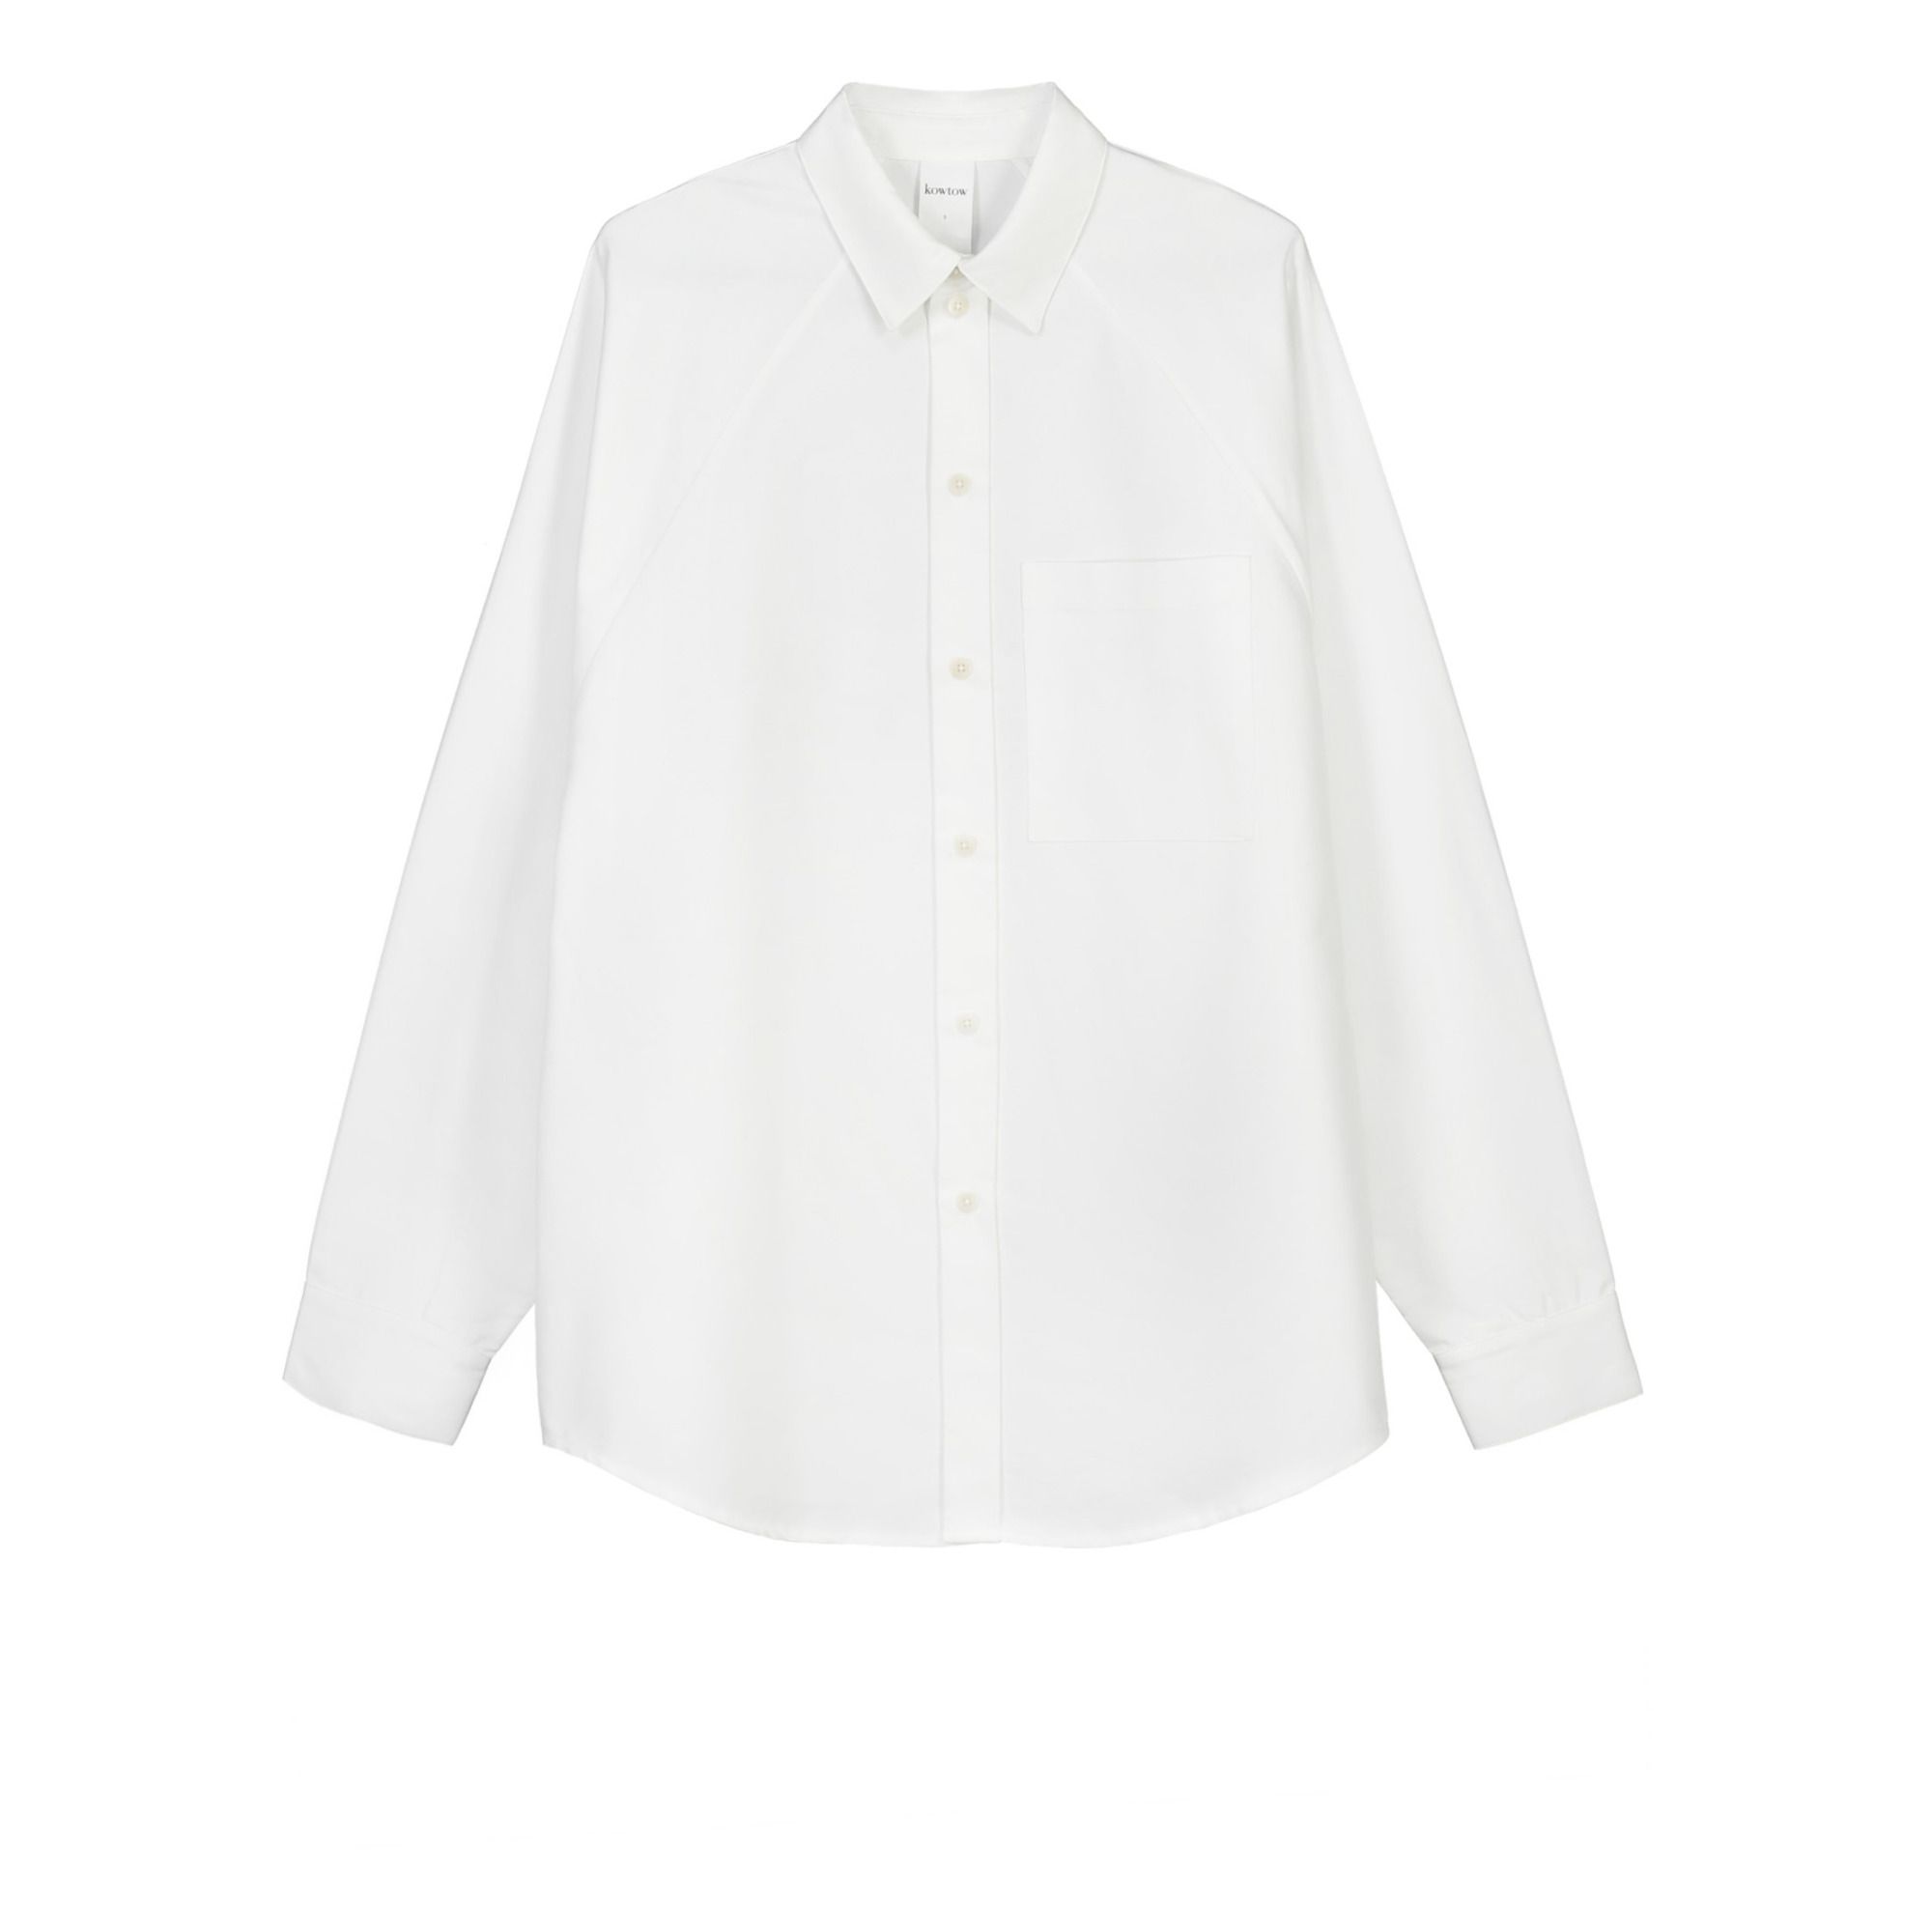 Kowtow - Chemise Oxford Coton Bio - Femme - Blanc